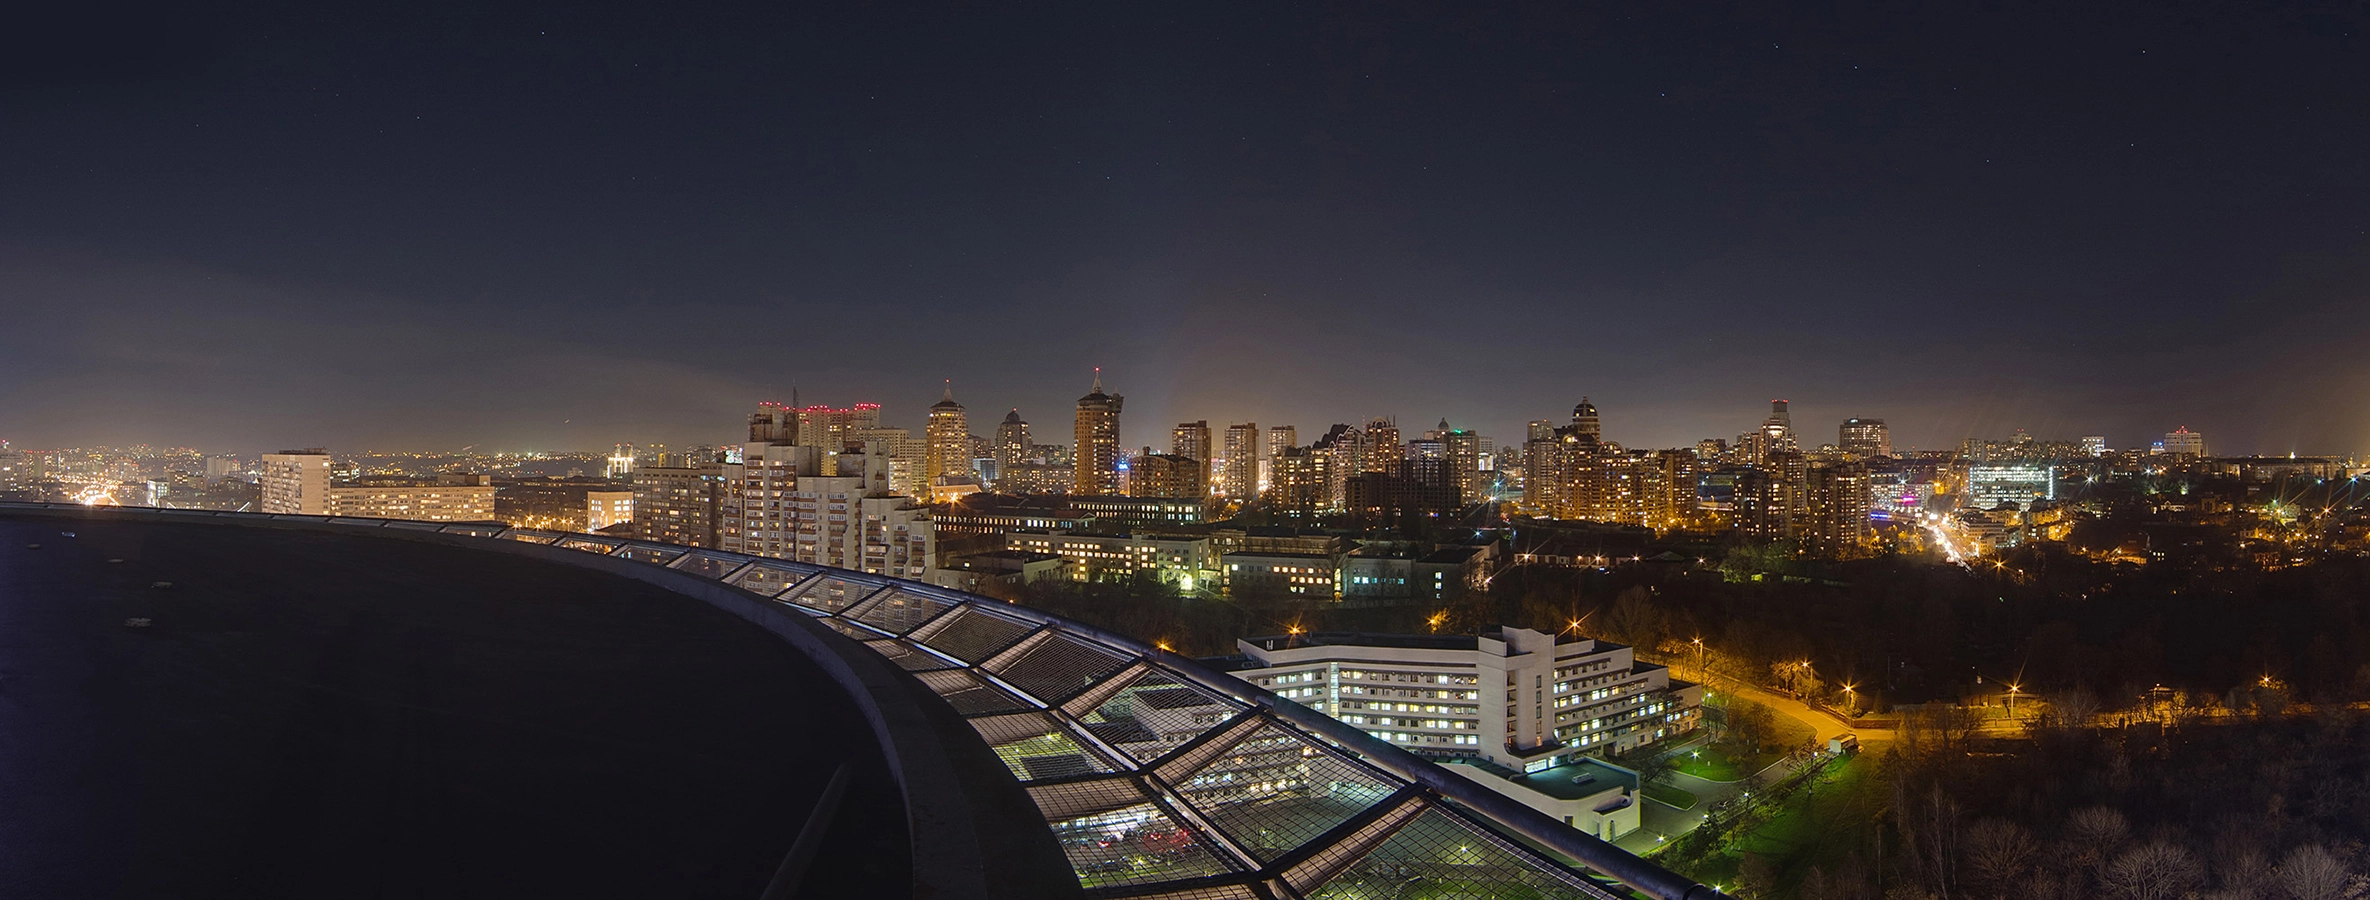 Панорама ночного города из окна